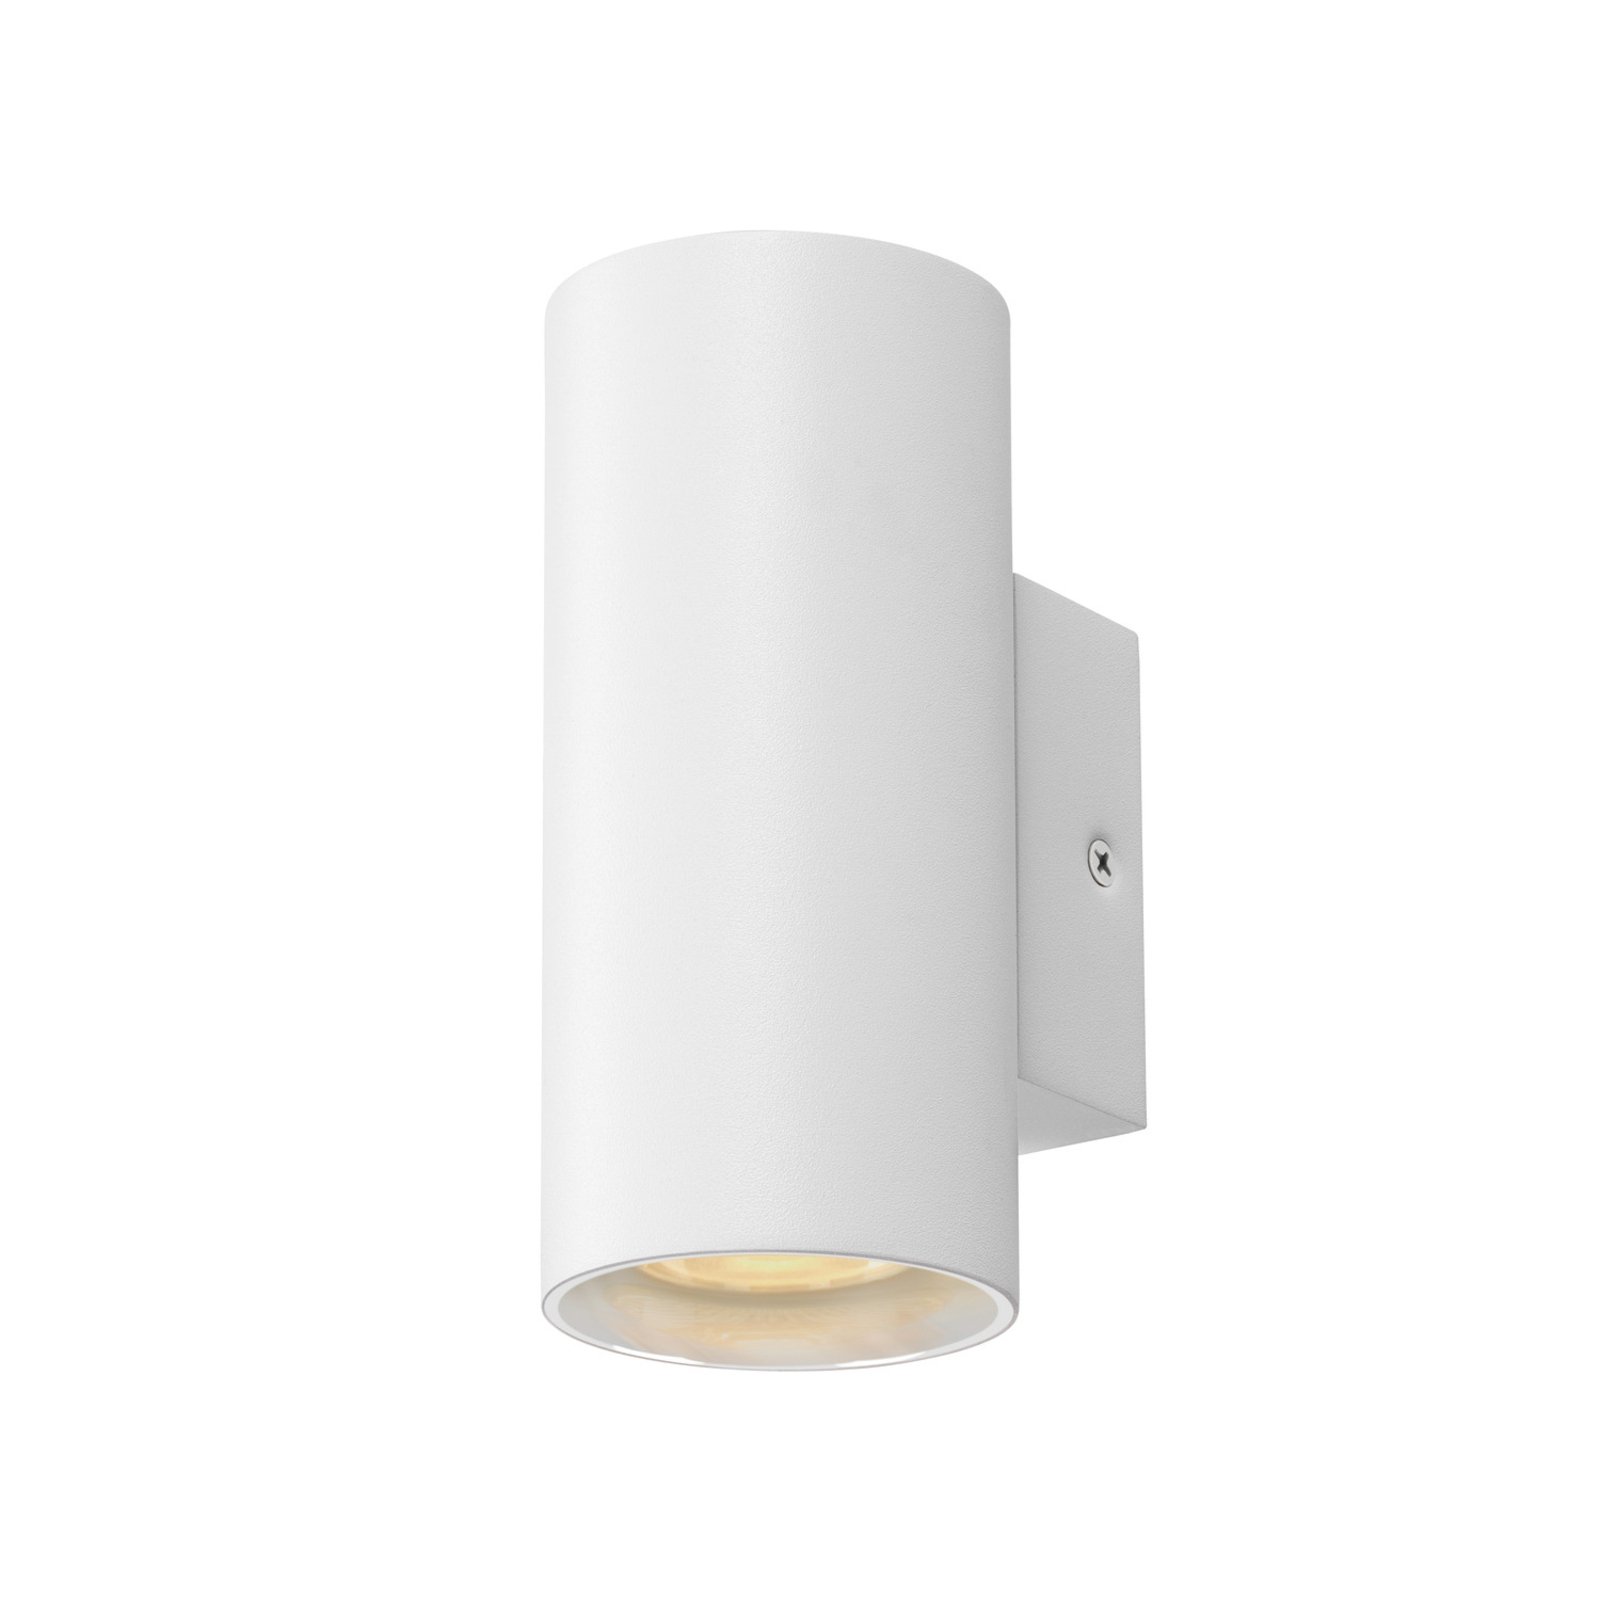 SLV Asto Tube wall light, GU10, down, white